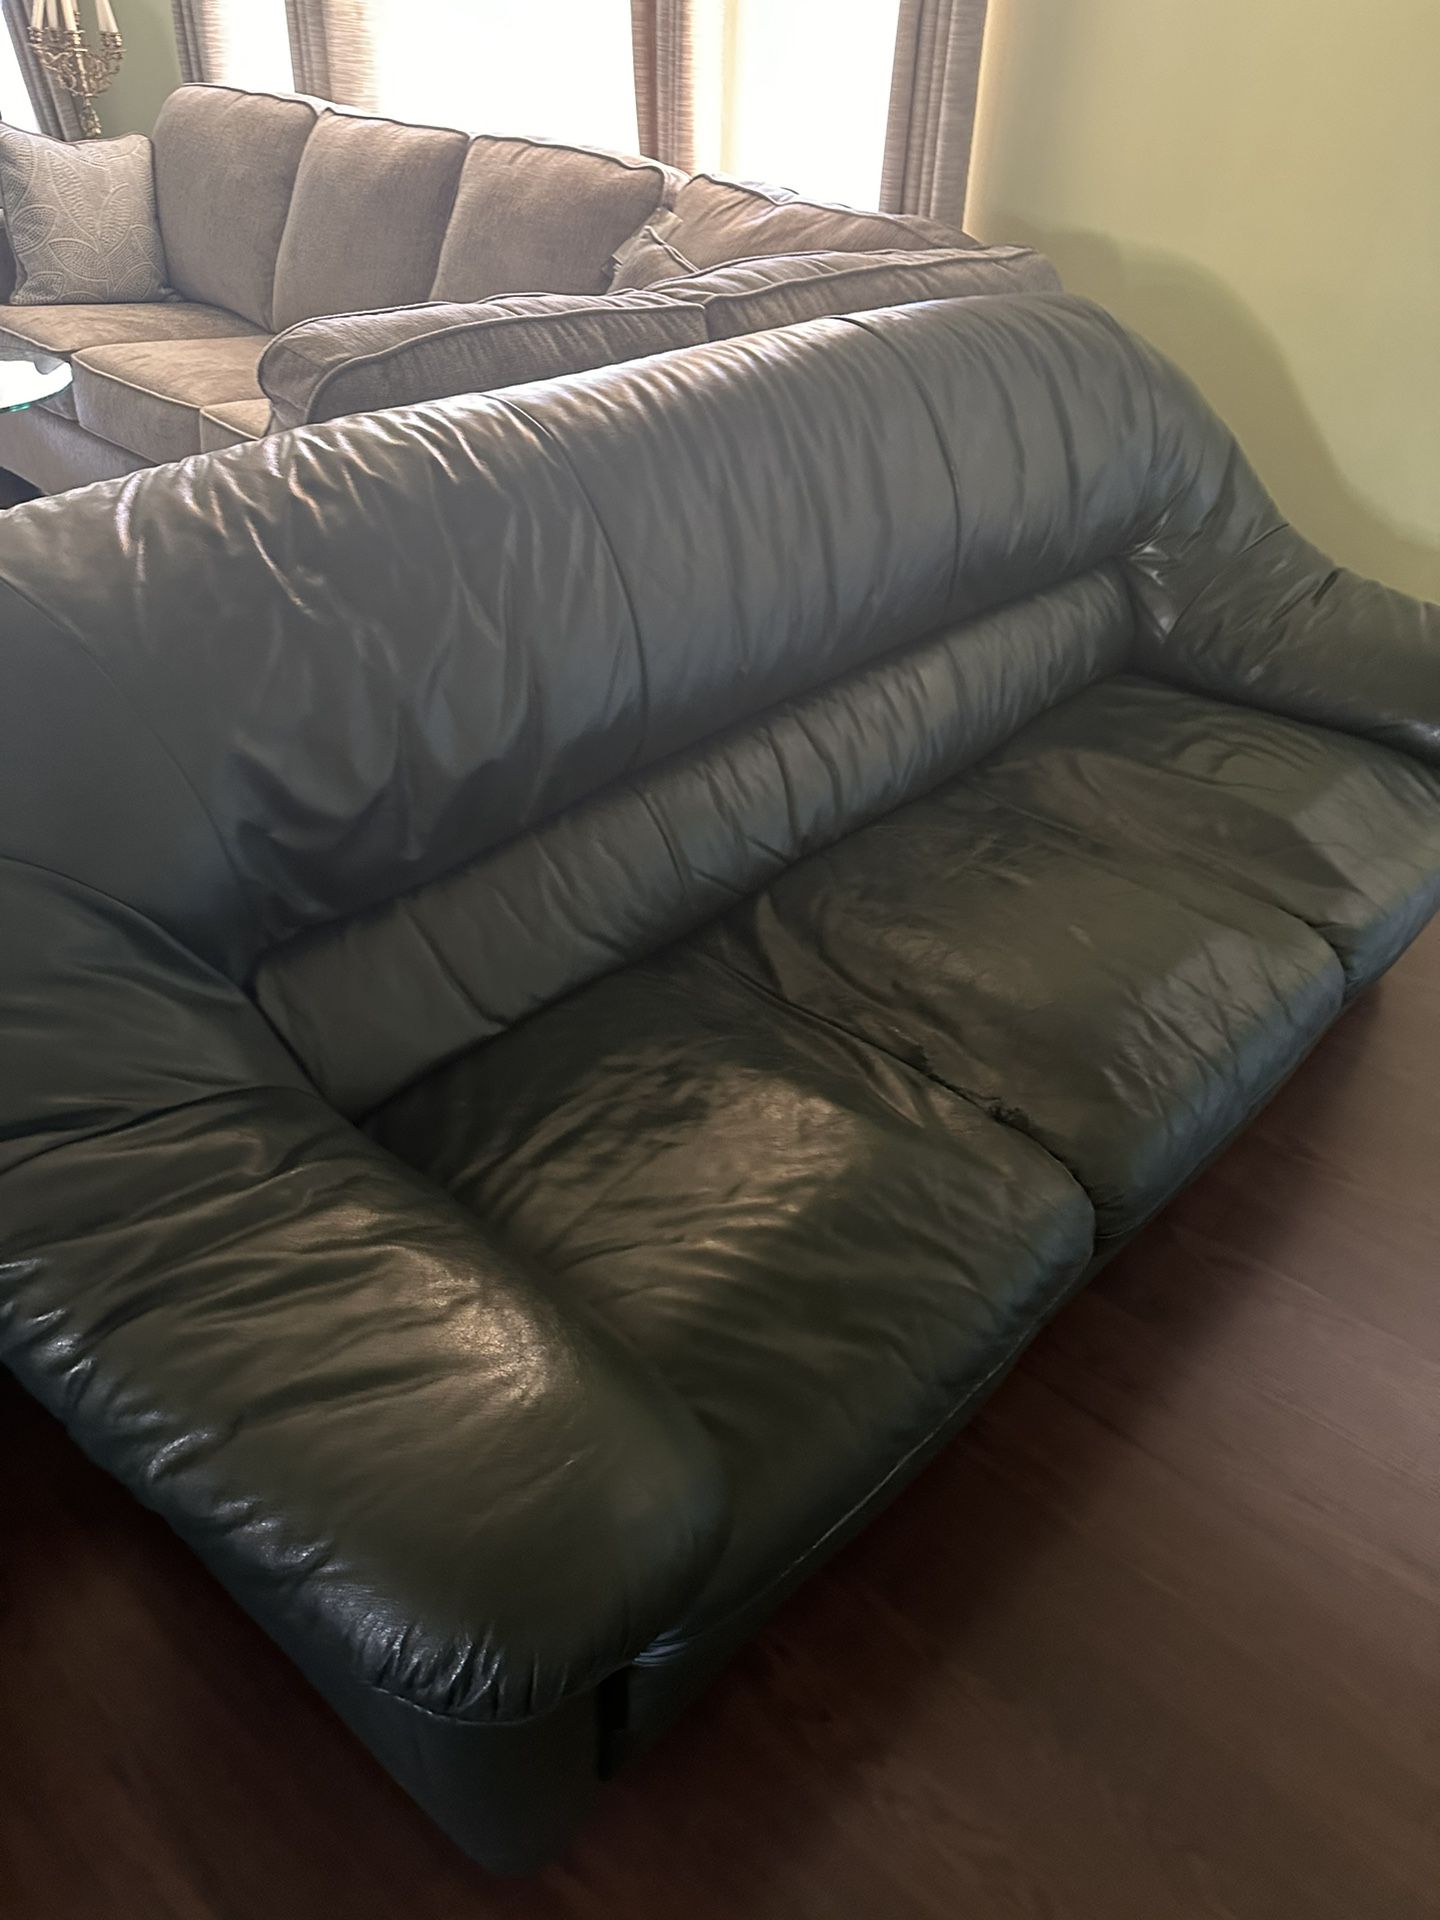 Leather Sofa, Dark Green, $45 Has One Rip Spot